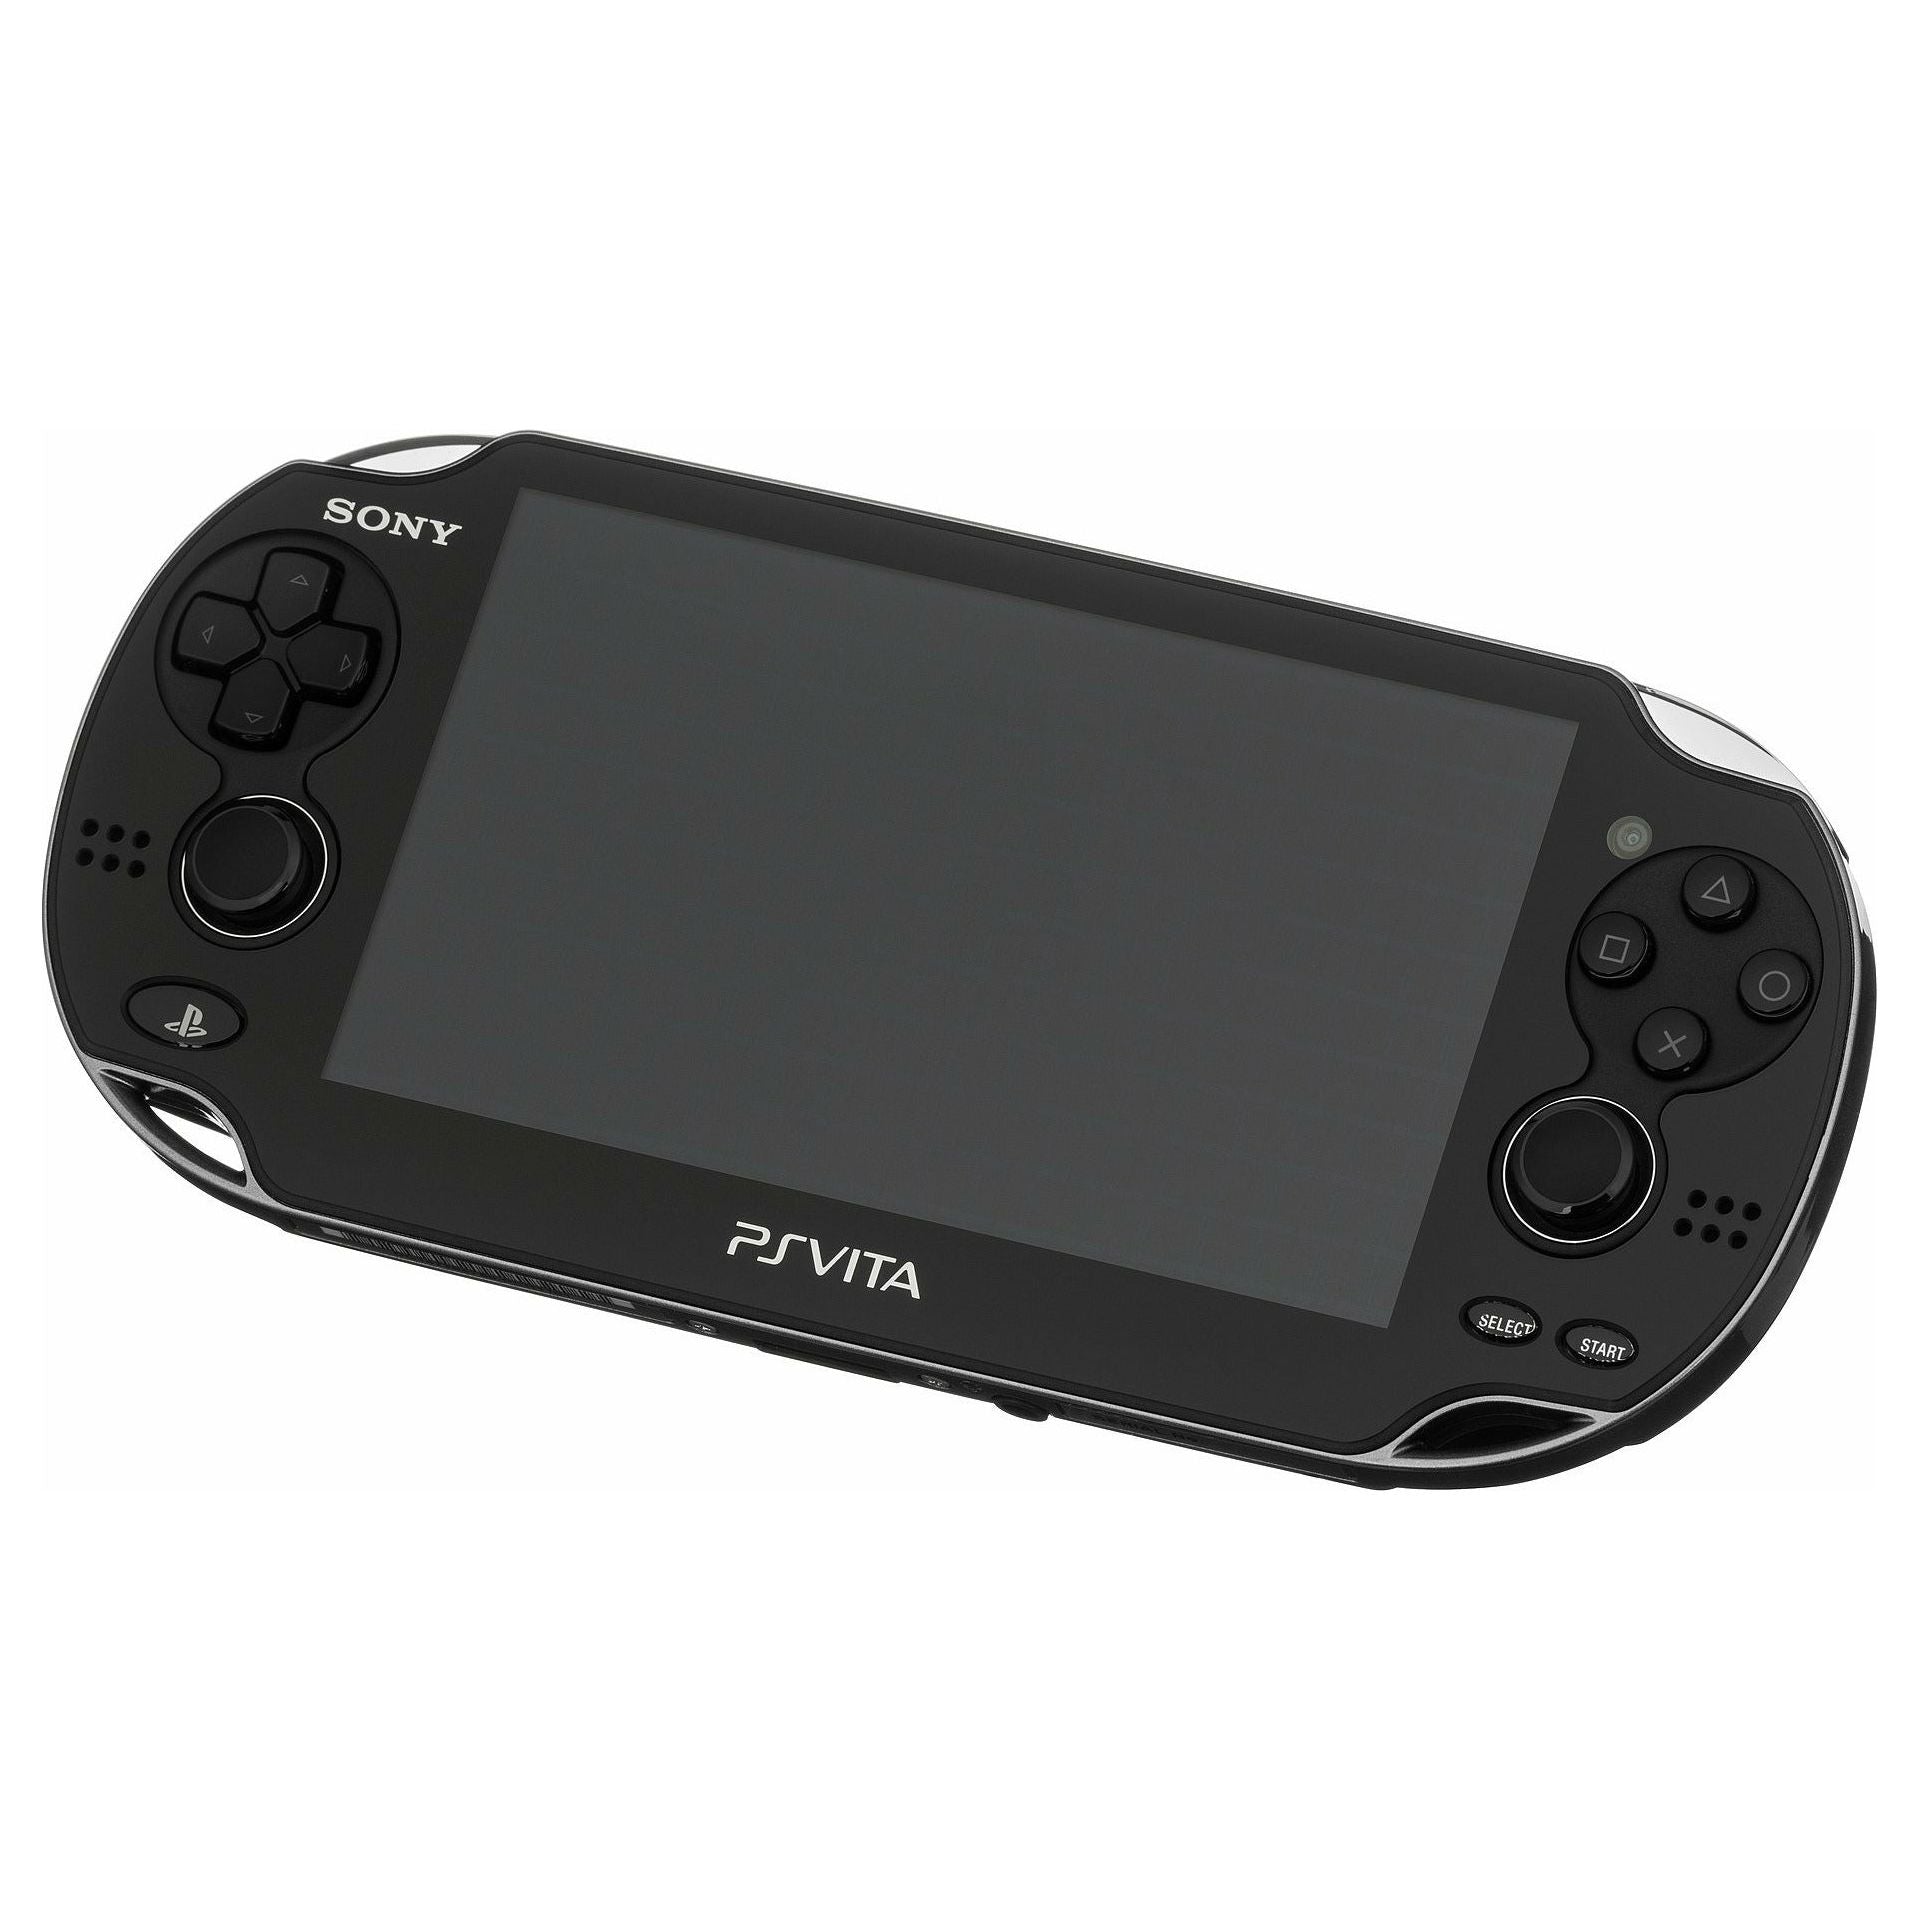 PS Vita System - Model 1101 (Black) (3G)